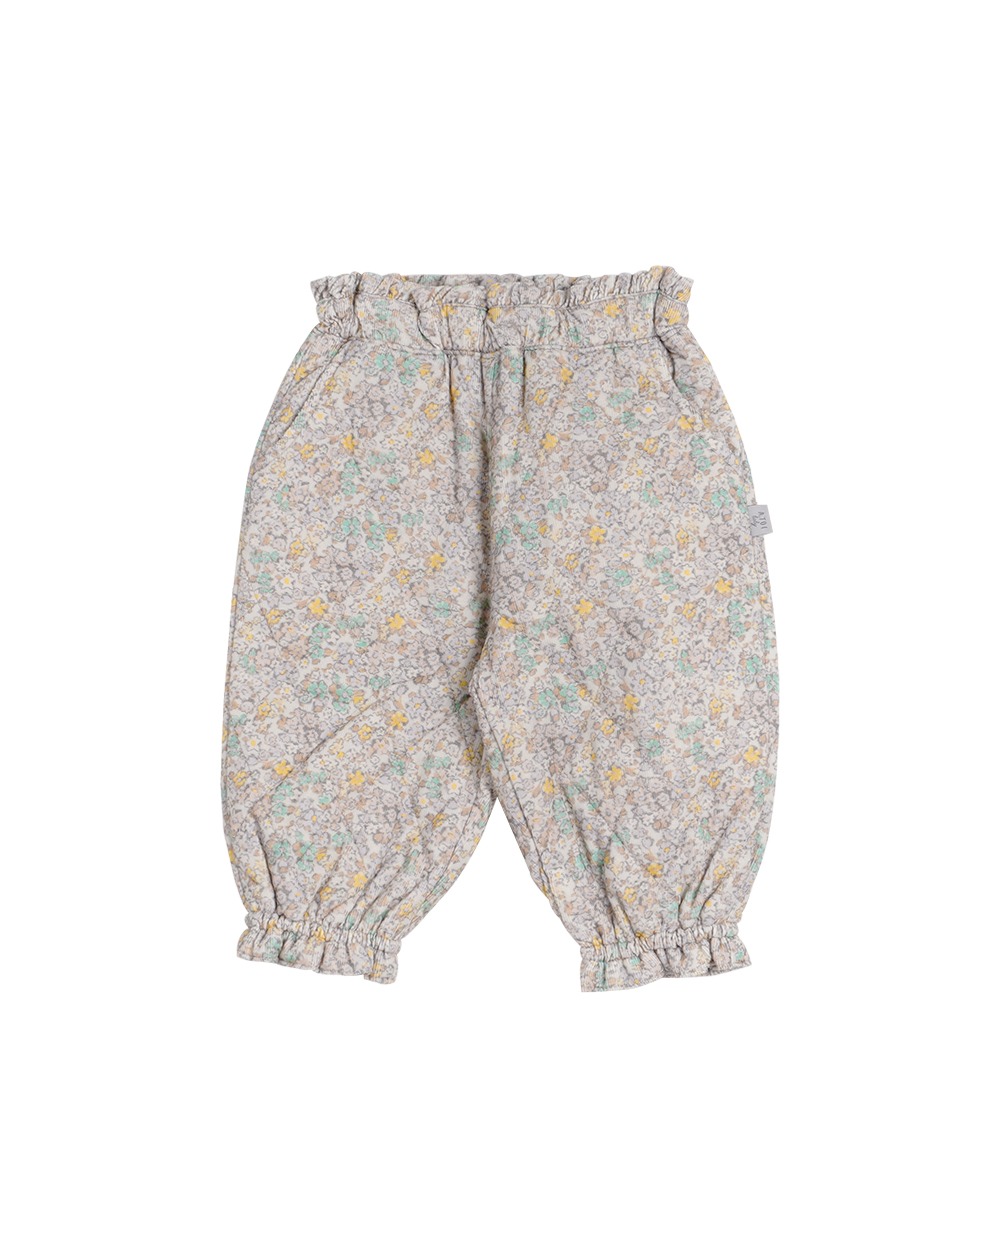 [a.toi baby] Gina Flower Padded Pants Cream - 마르마르